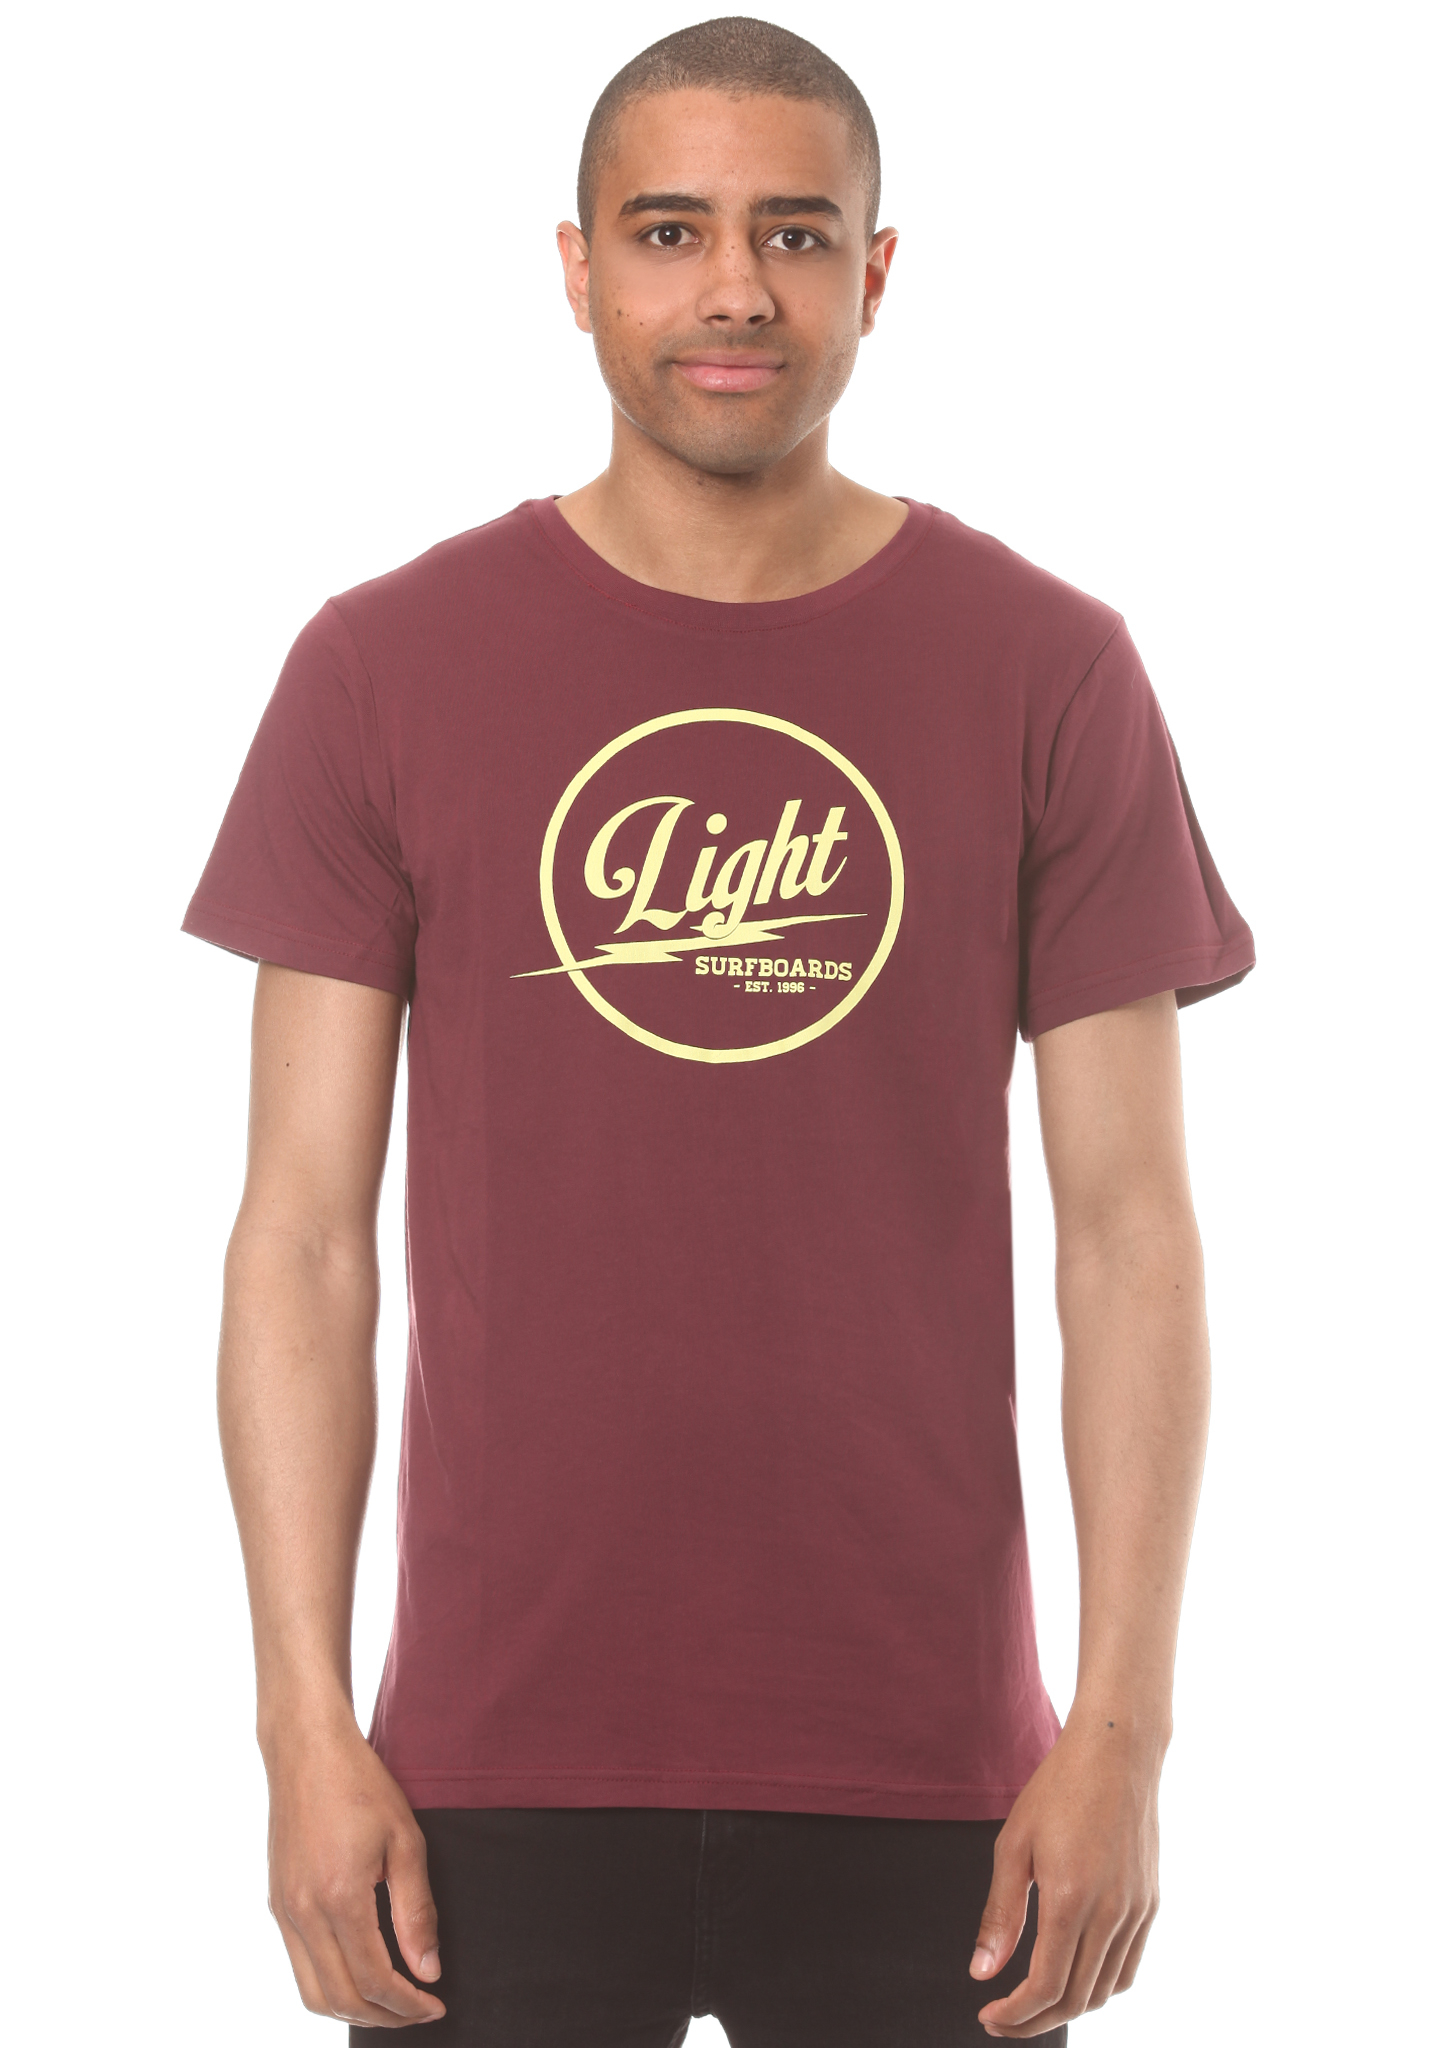 LIGHT Surfboards T-Shirt burgundy S